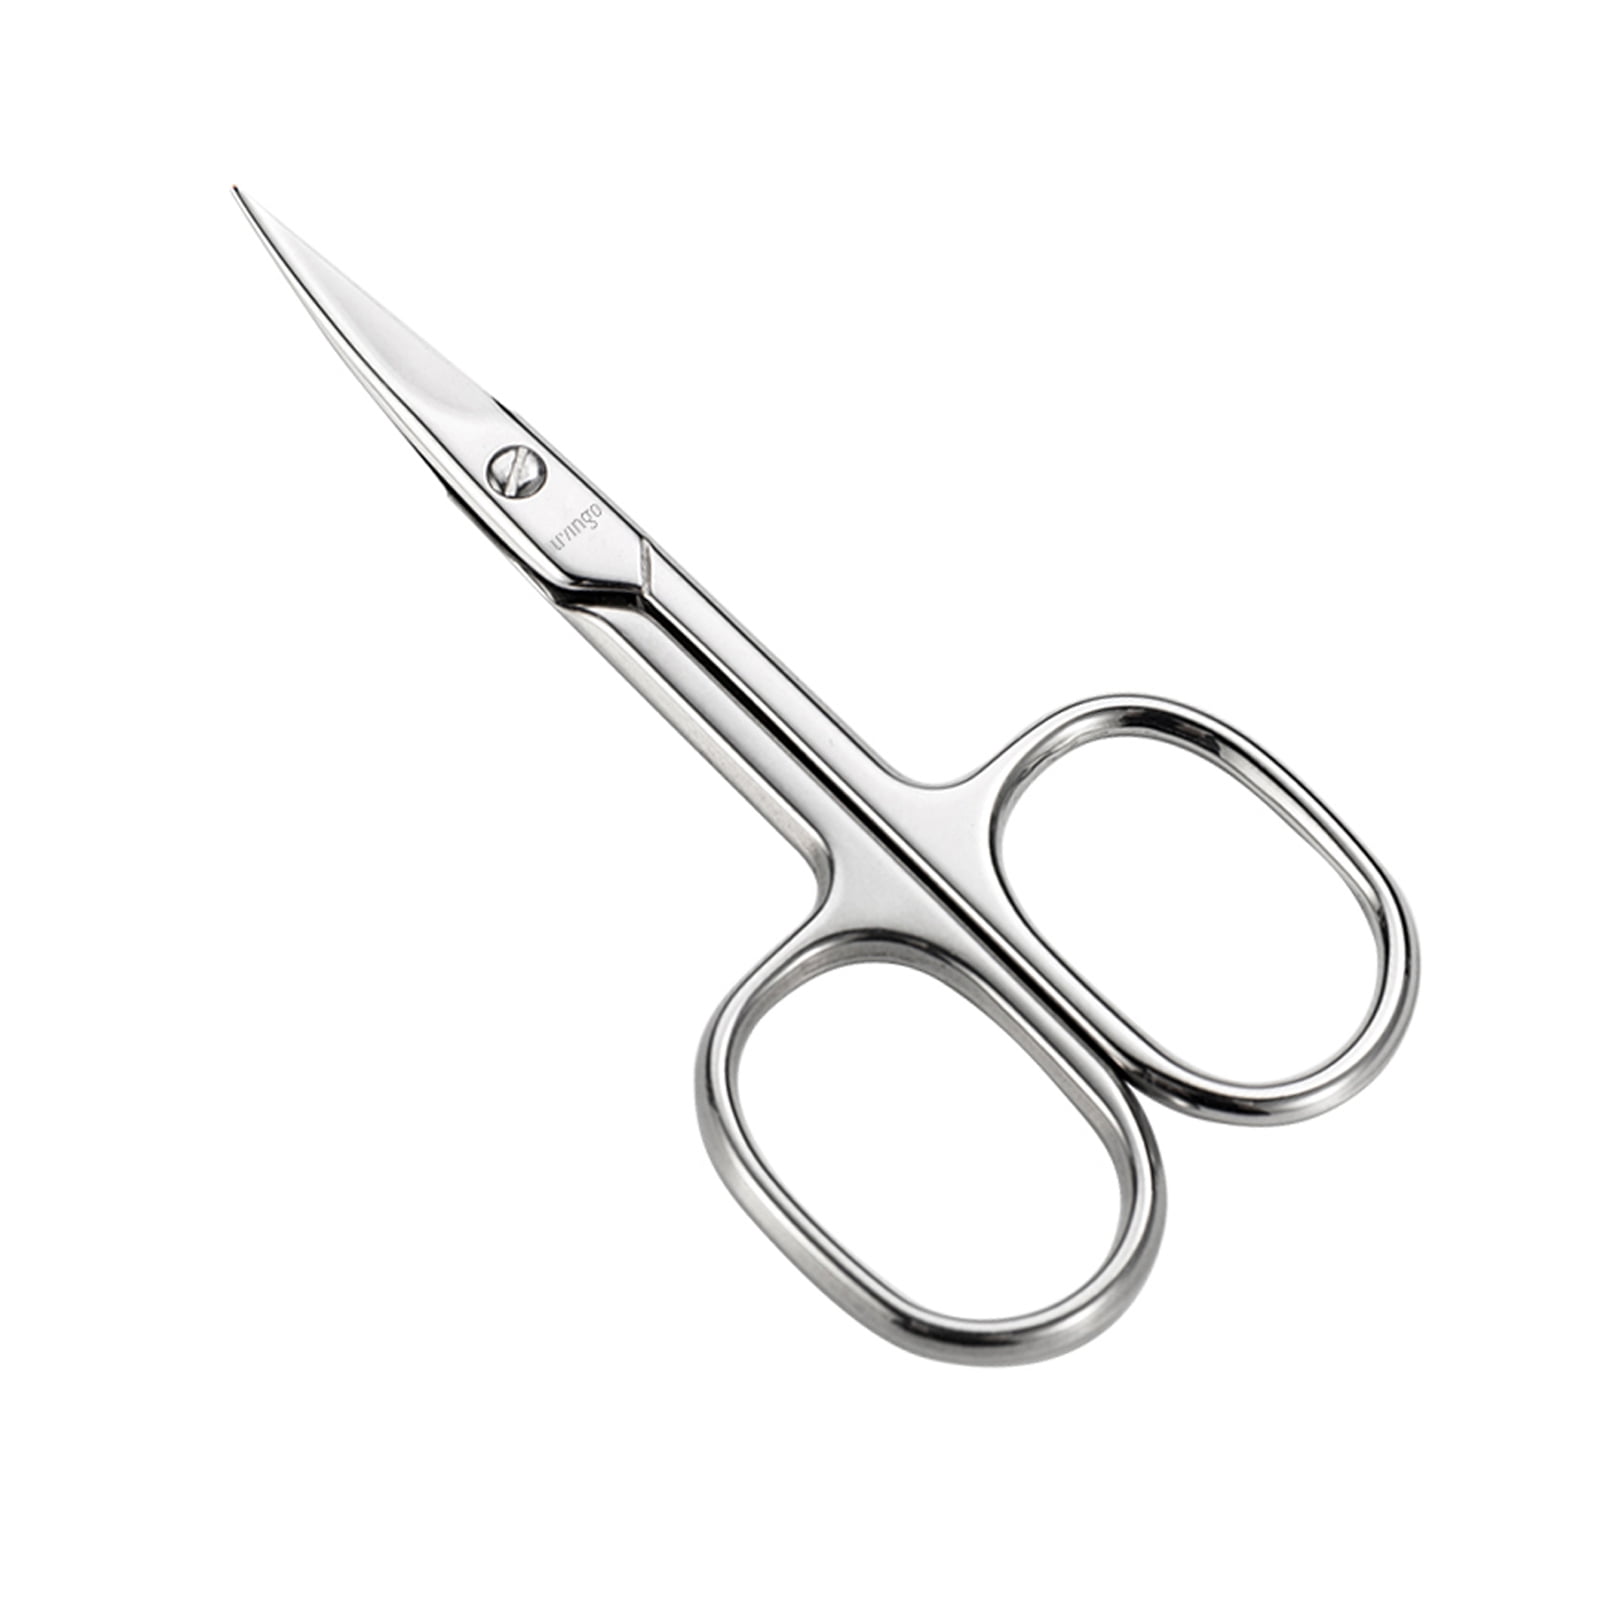 Curved Blade Nail Cuticle Scissors - Revlon